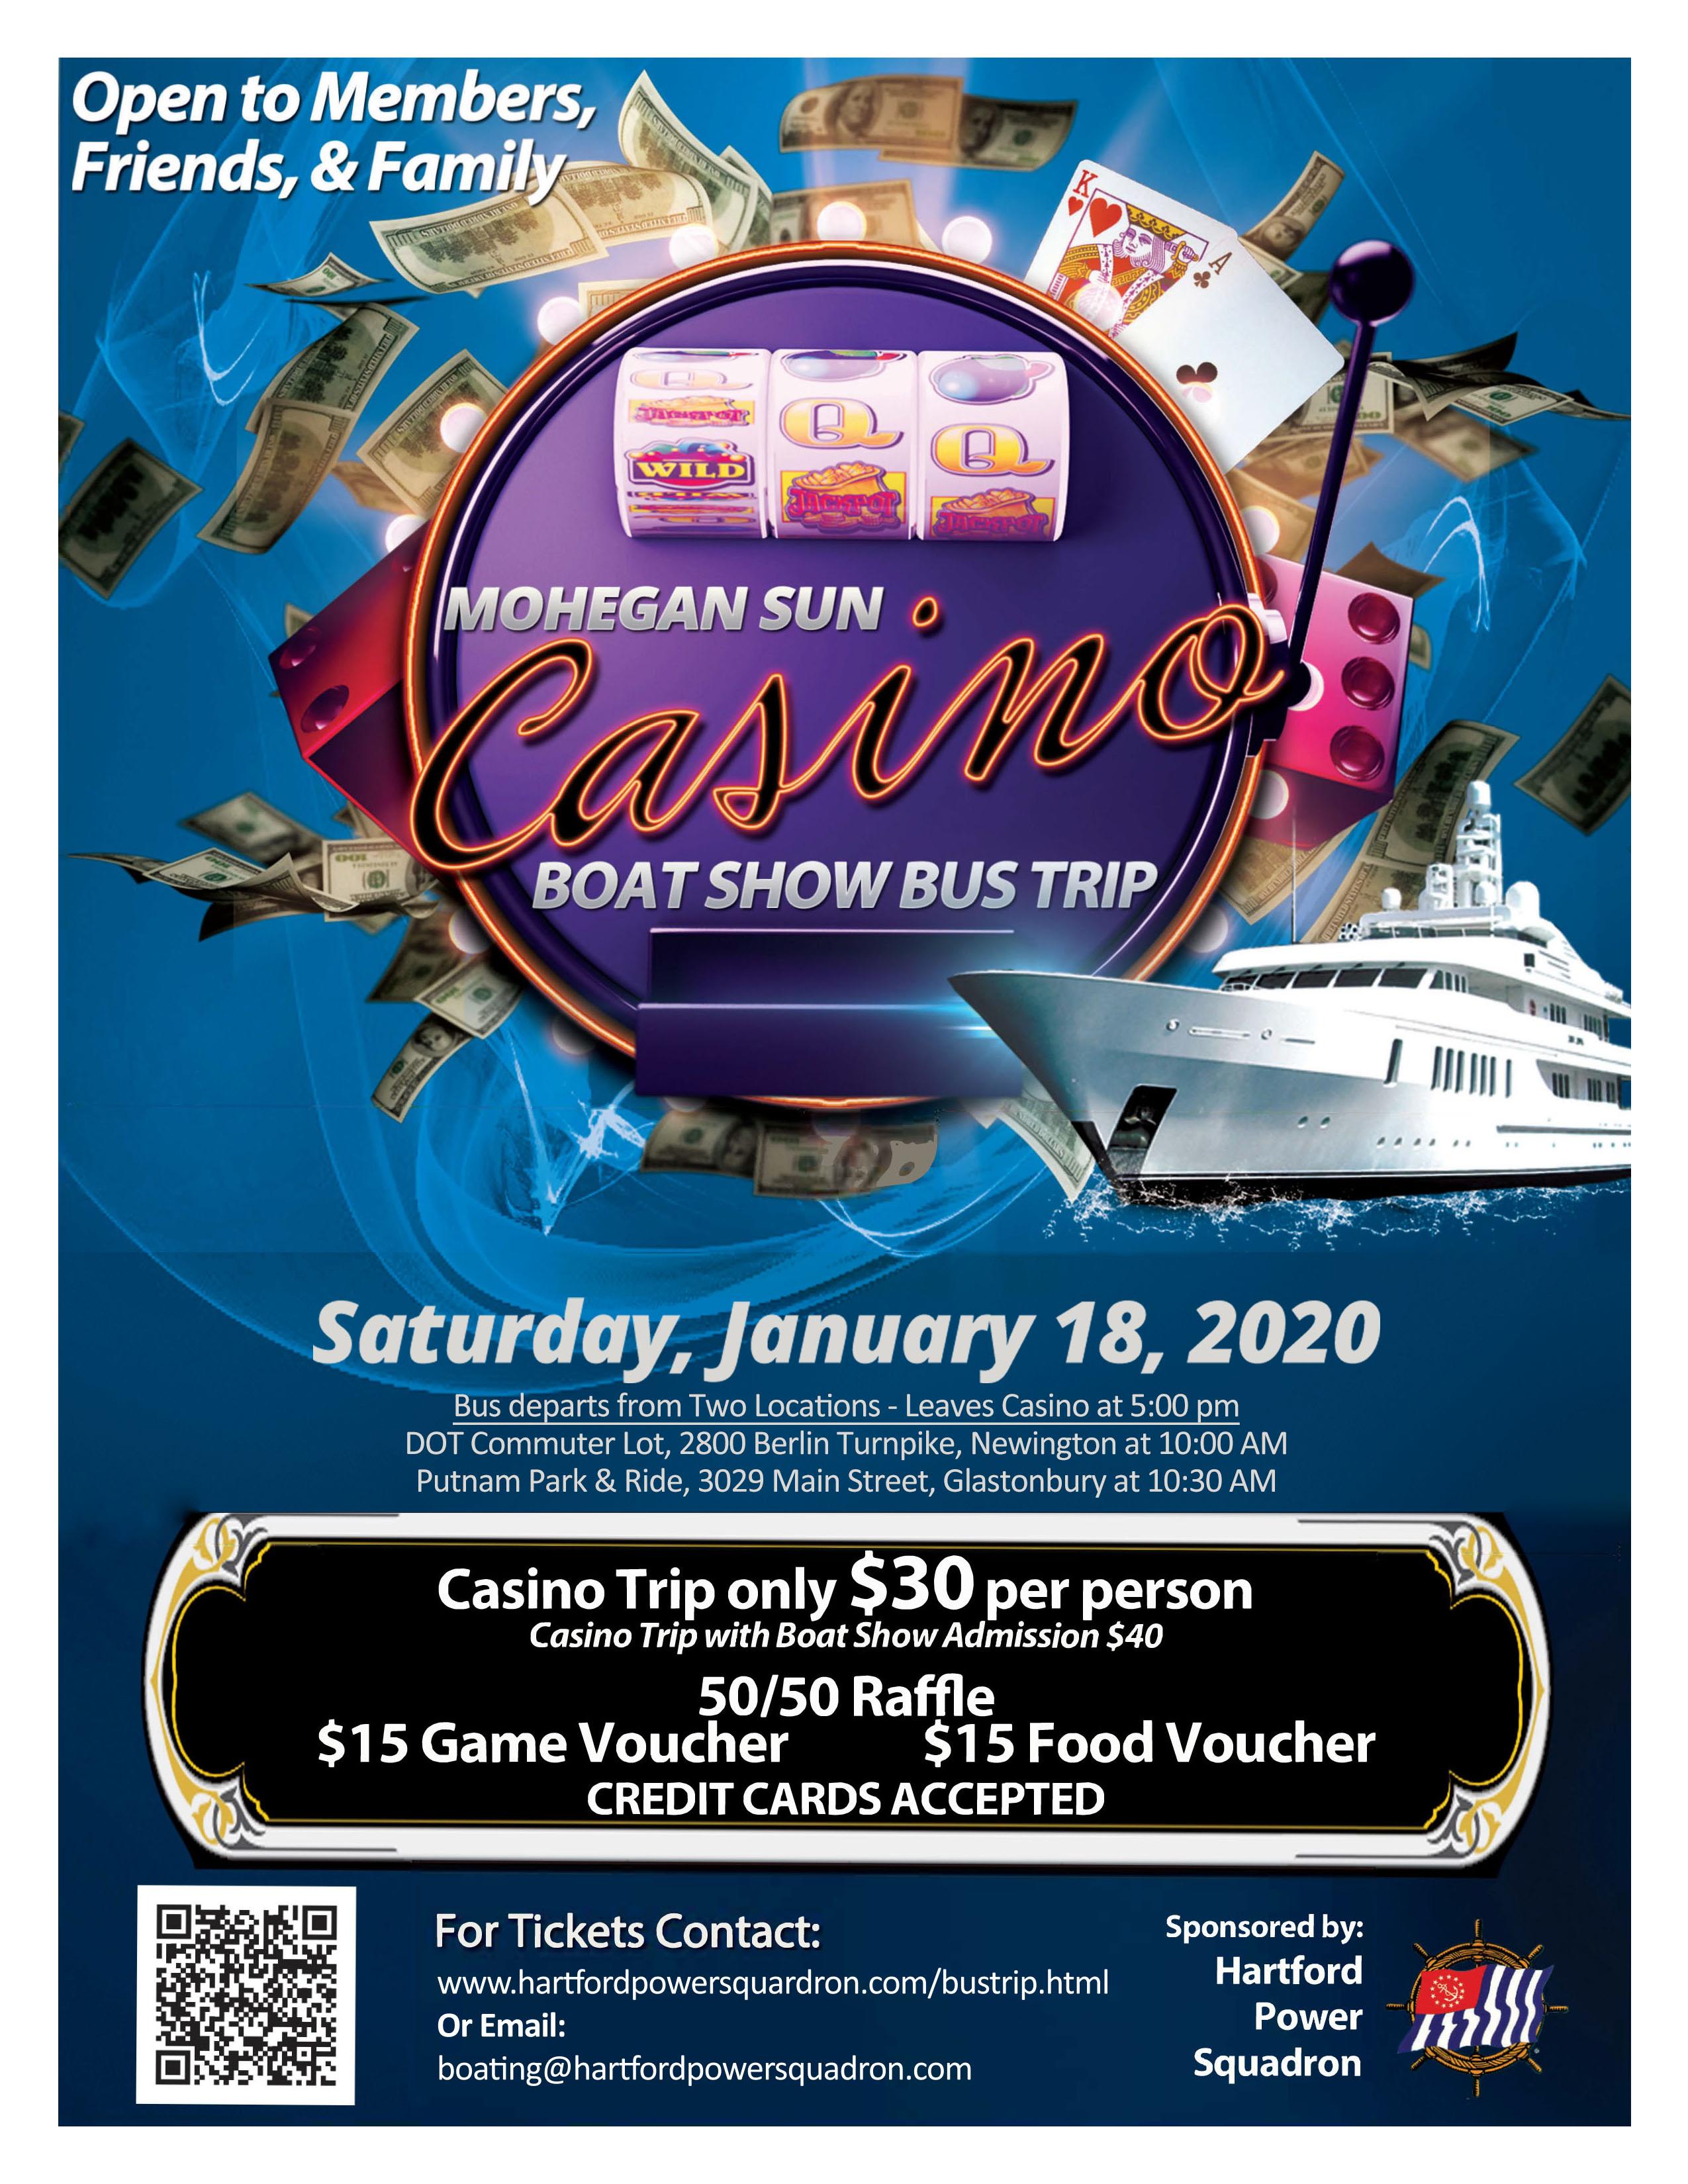 Casino Bus Trip Details